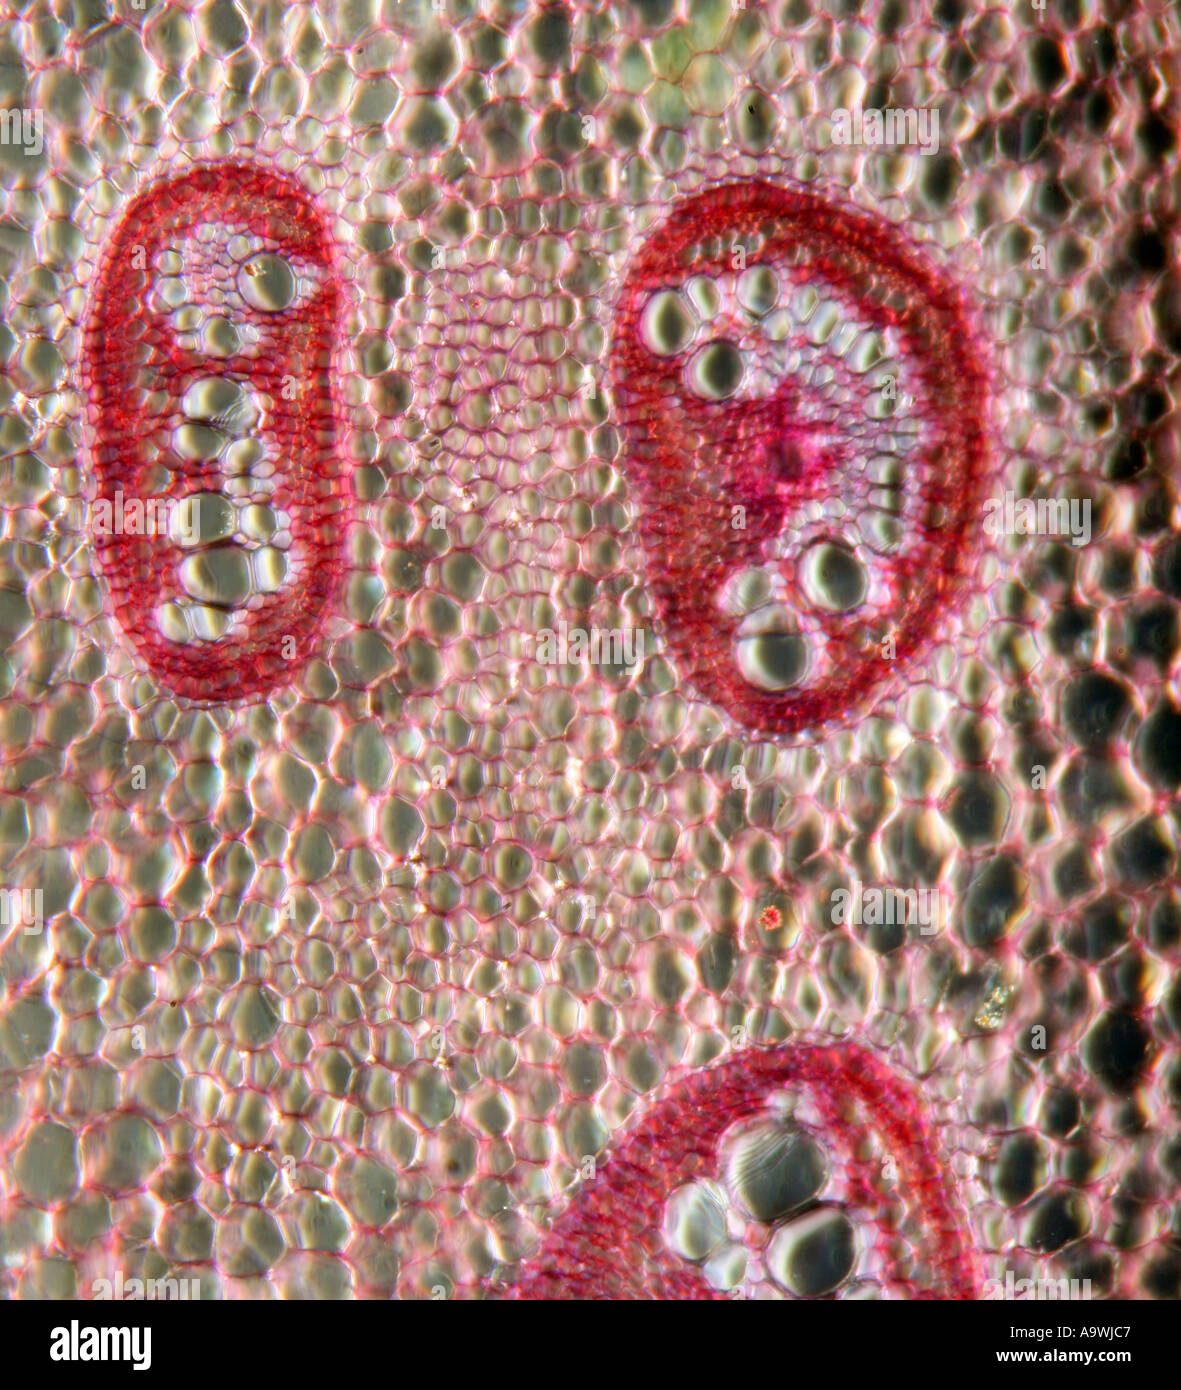 Pteris fern stem section photomicrograph Stock Photo